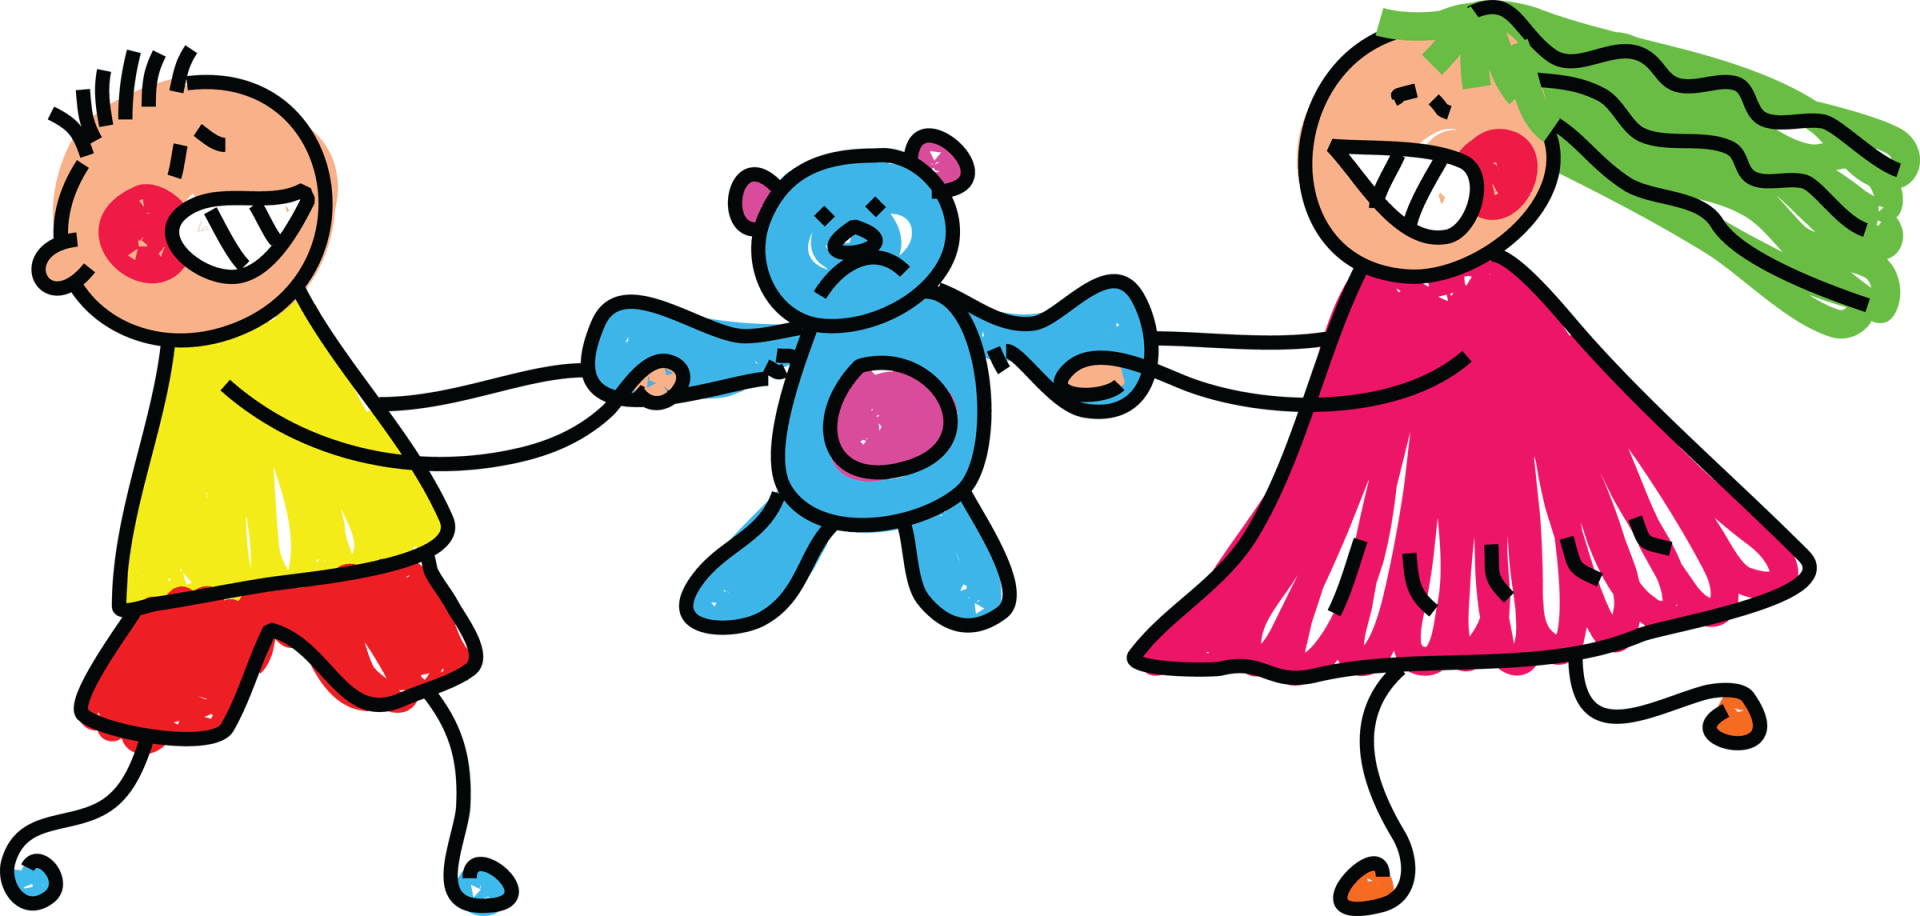 Two cartoon stick children fighting over a teddy bear